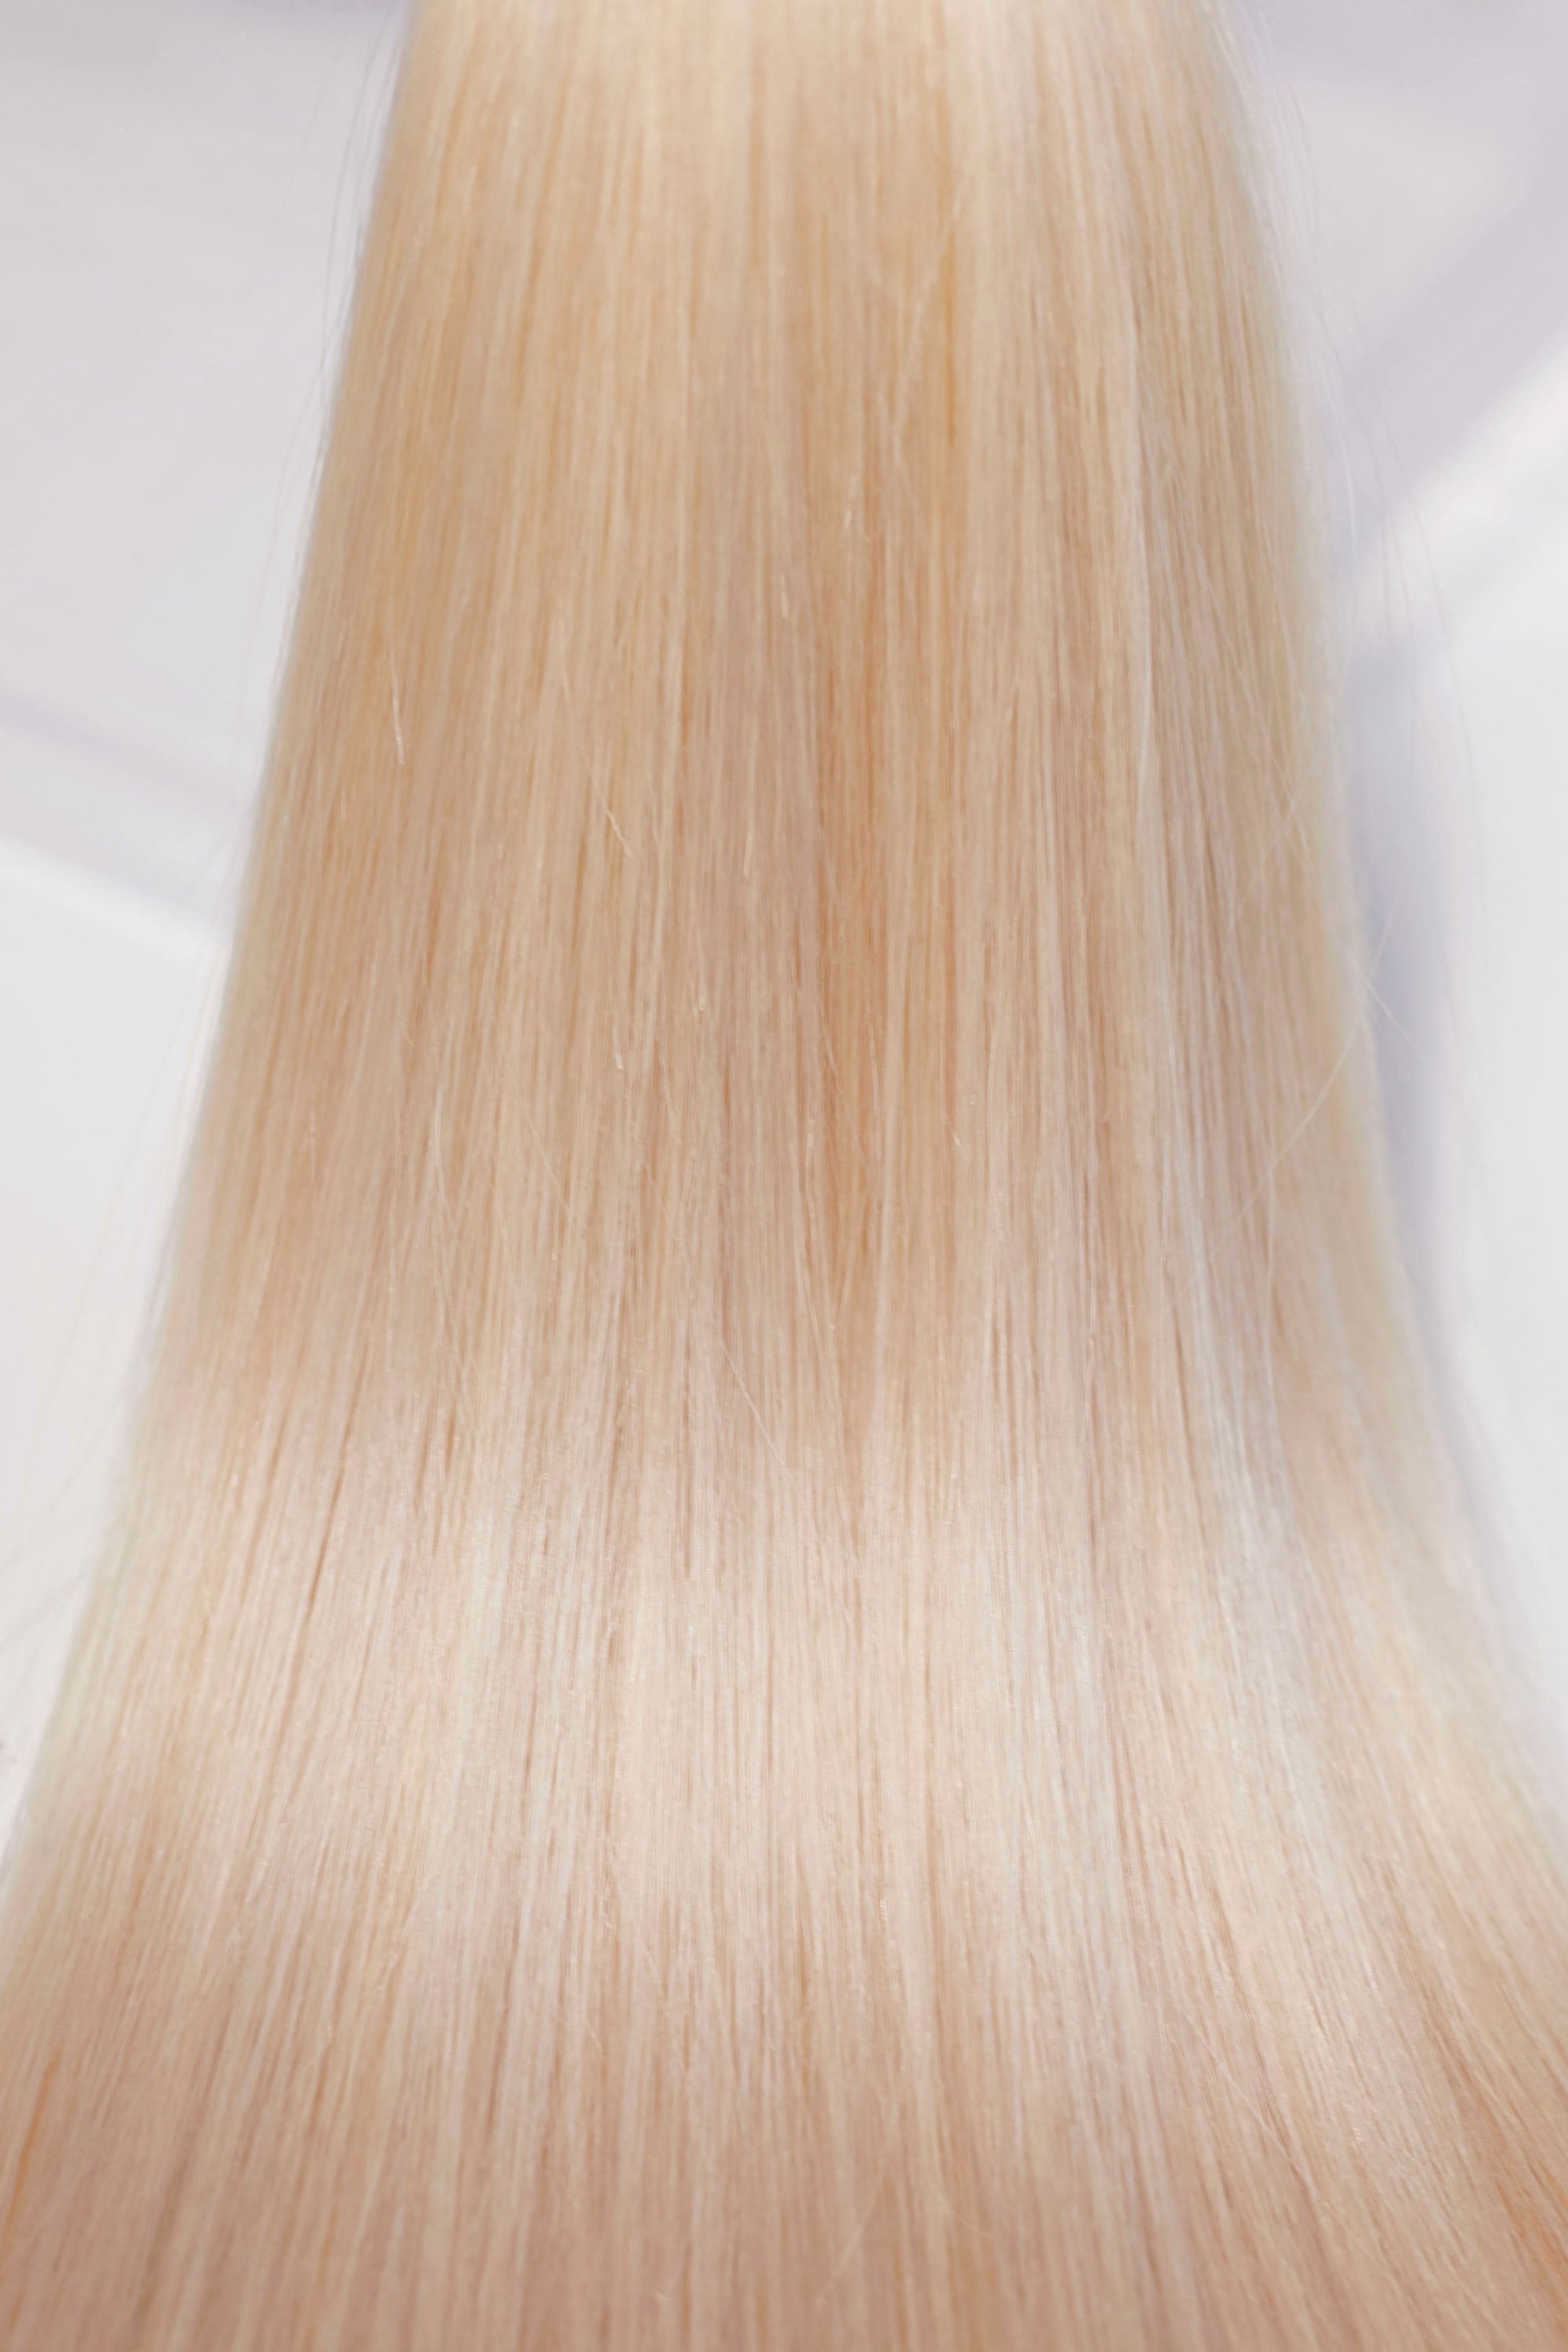 Behair professional Bulk hair "Premium" 20" (50cm) Natural Straight Platinum Blond #60 - 25g hair extensions